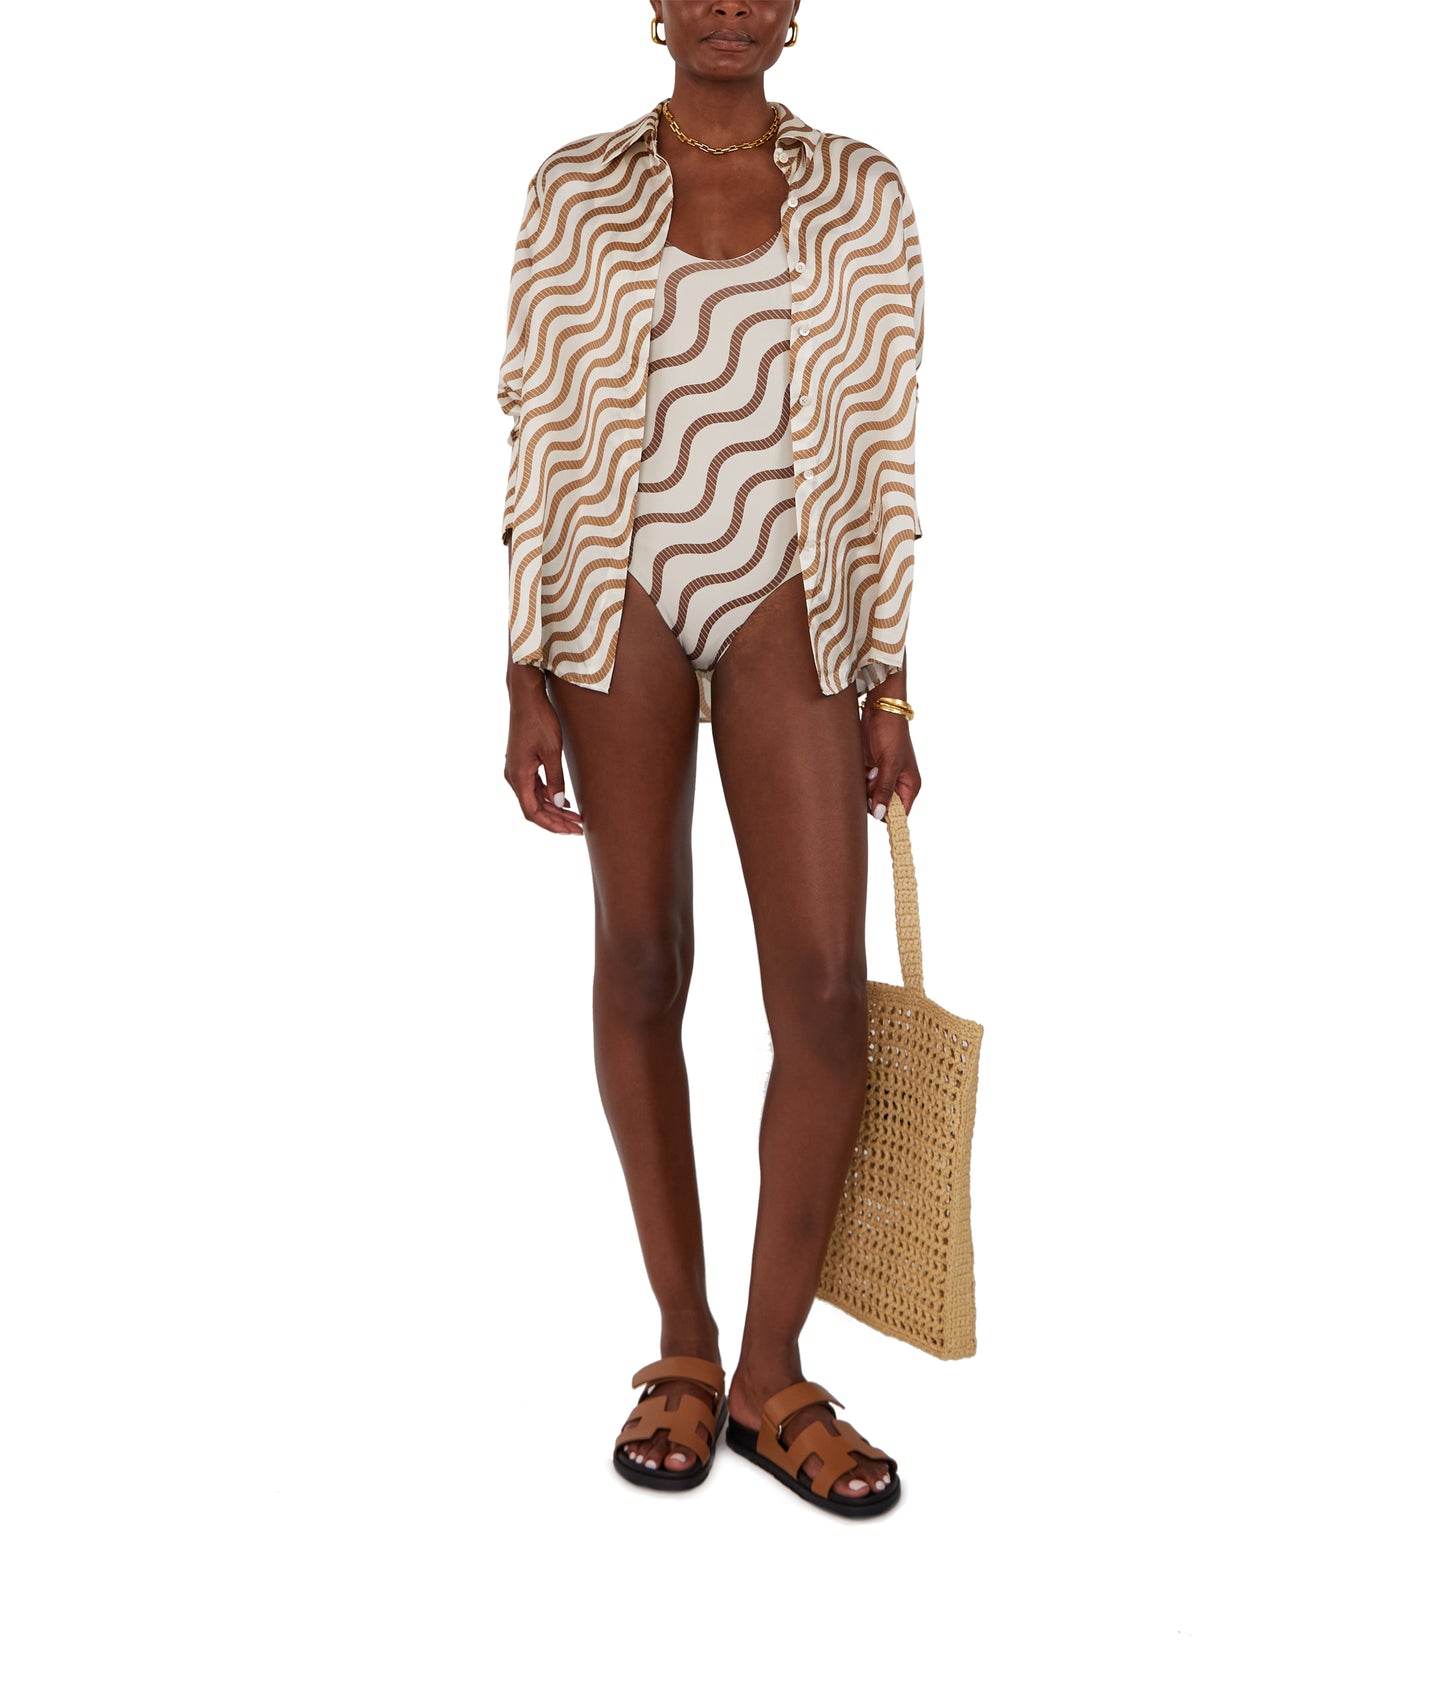 MAR - Bespoke Sand Wave Striped Swimsuit